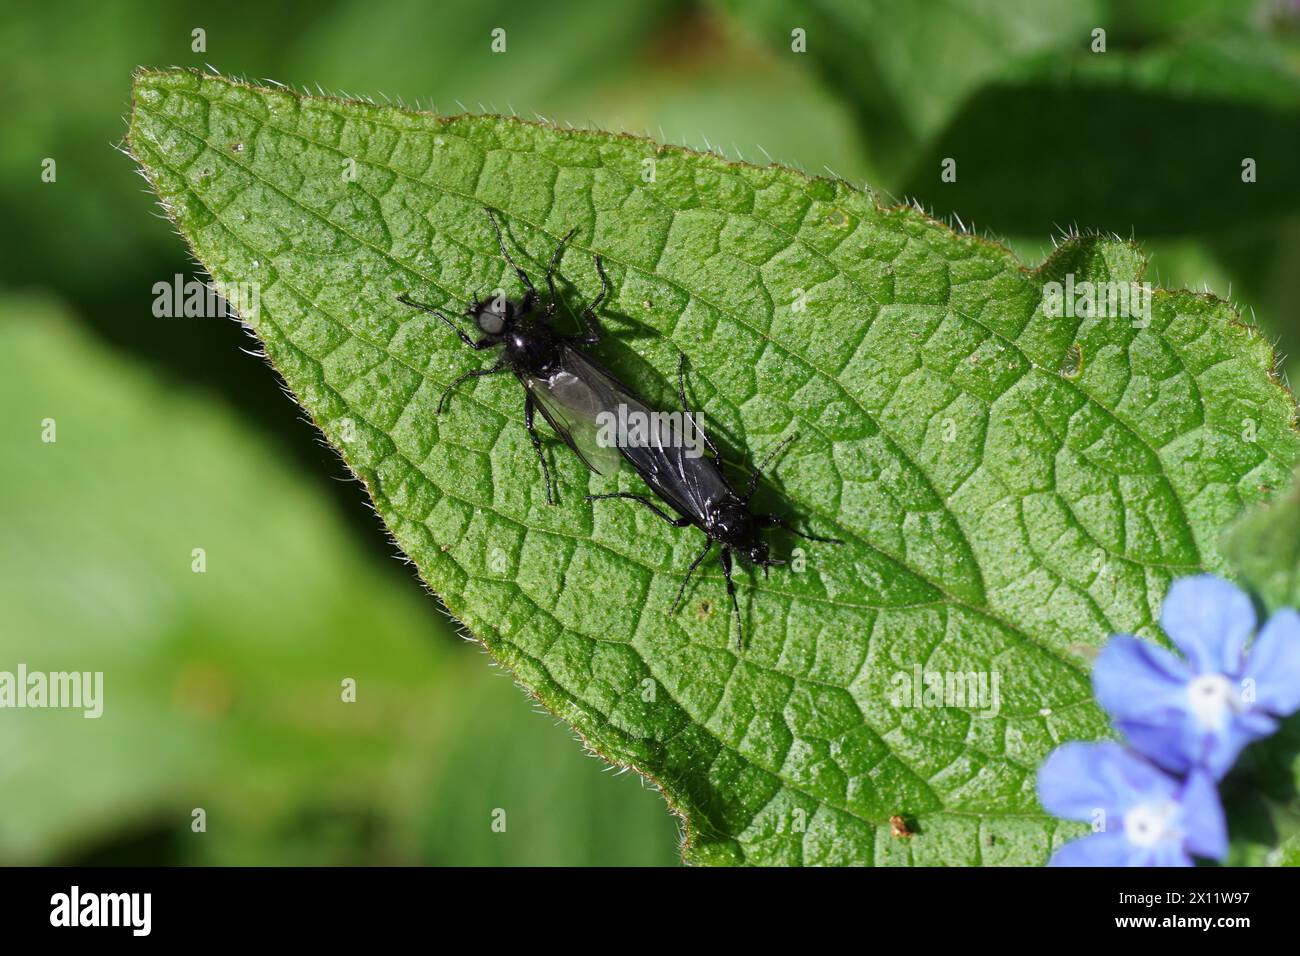 Female, male St Mark's fly (Bibio marci), family Bibionidae on a leaf of green alkanet (Pentaglottis sempervirens). Mating. Spring April, Dutch garden Stock Photo